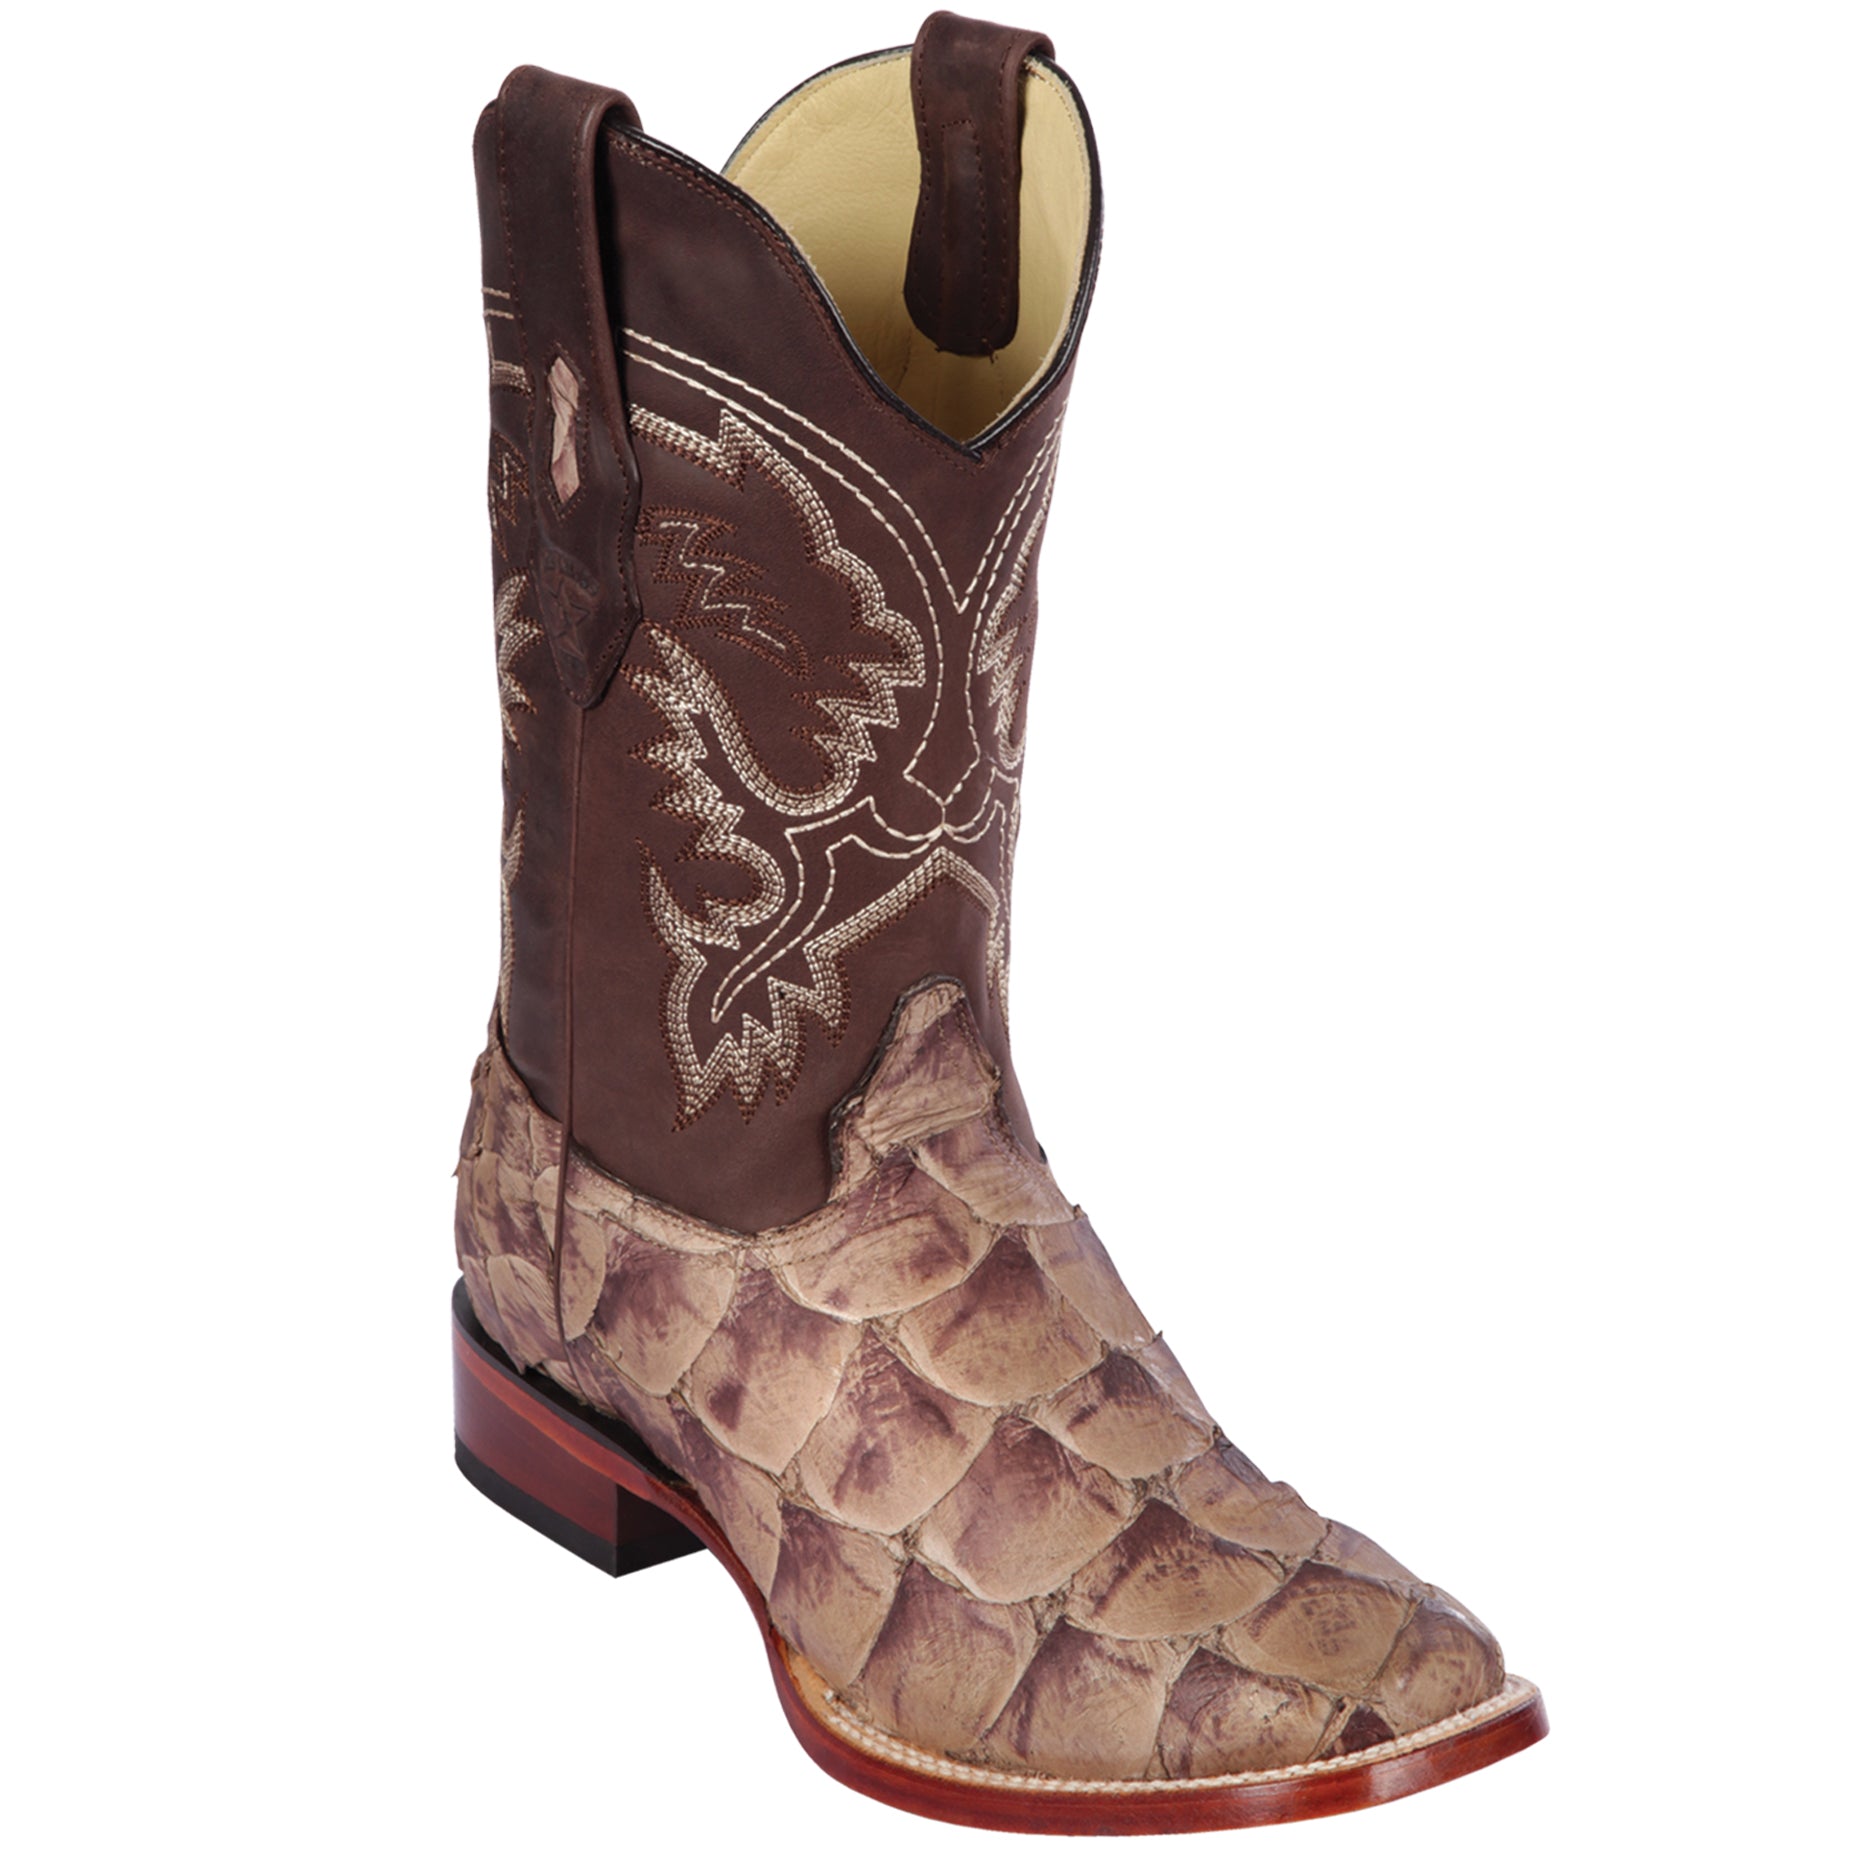 Pirarucu western boots for men by Los Altos Boots
